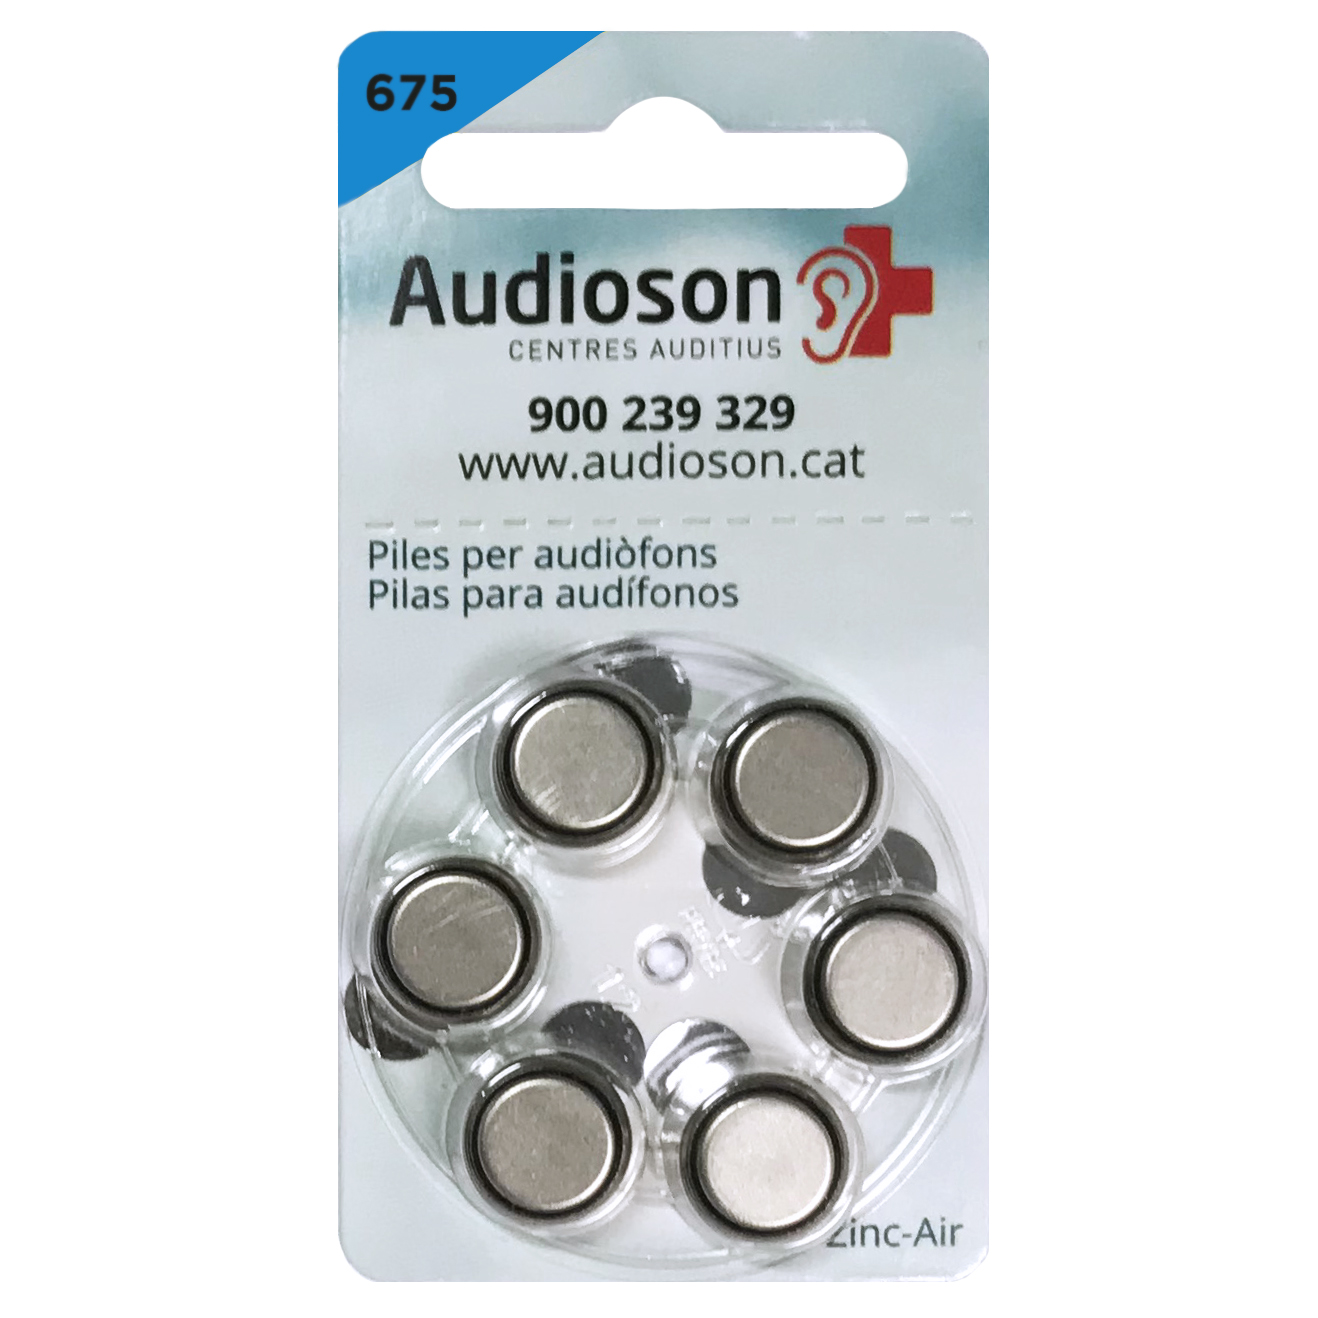 piles-per-audiofons-audioson-model-675